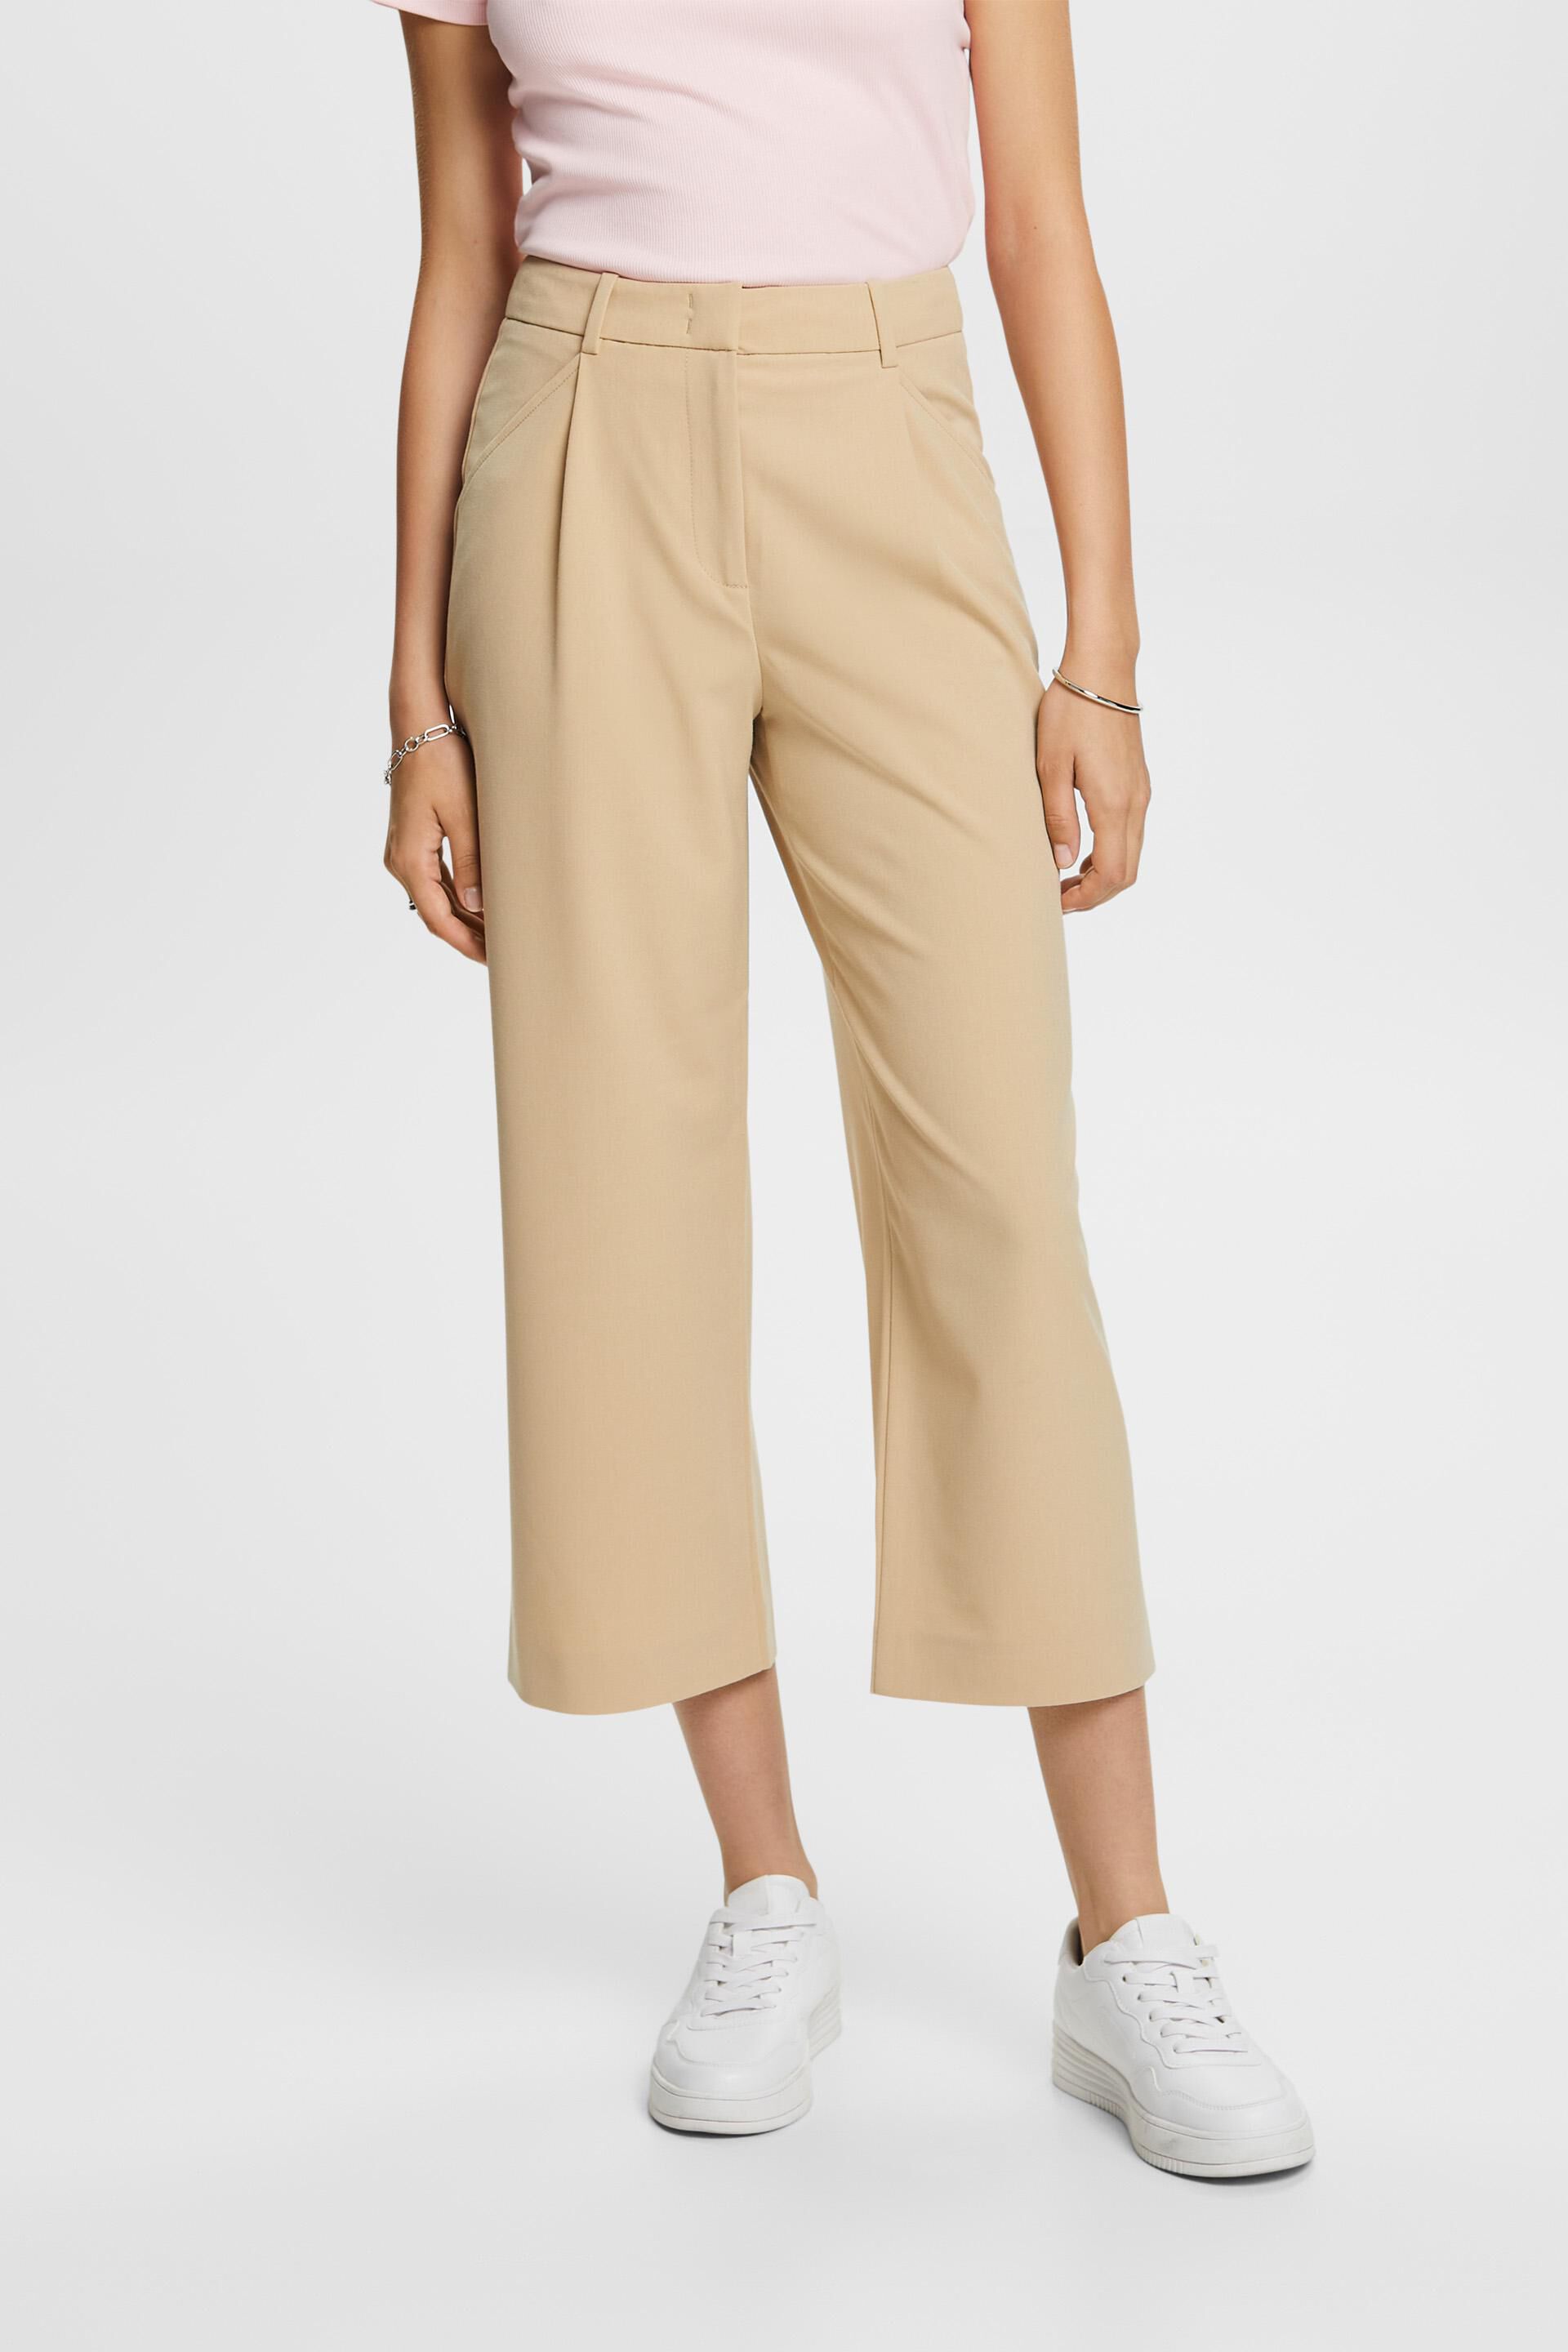 Esprit Damen High-rise culottes with waist pleats